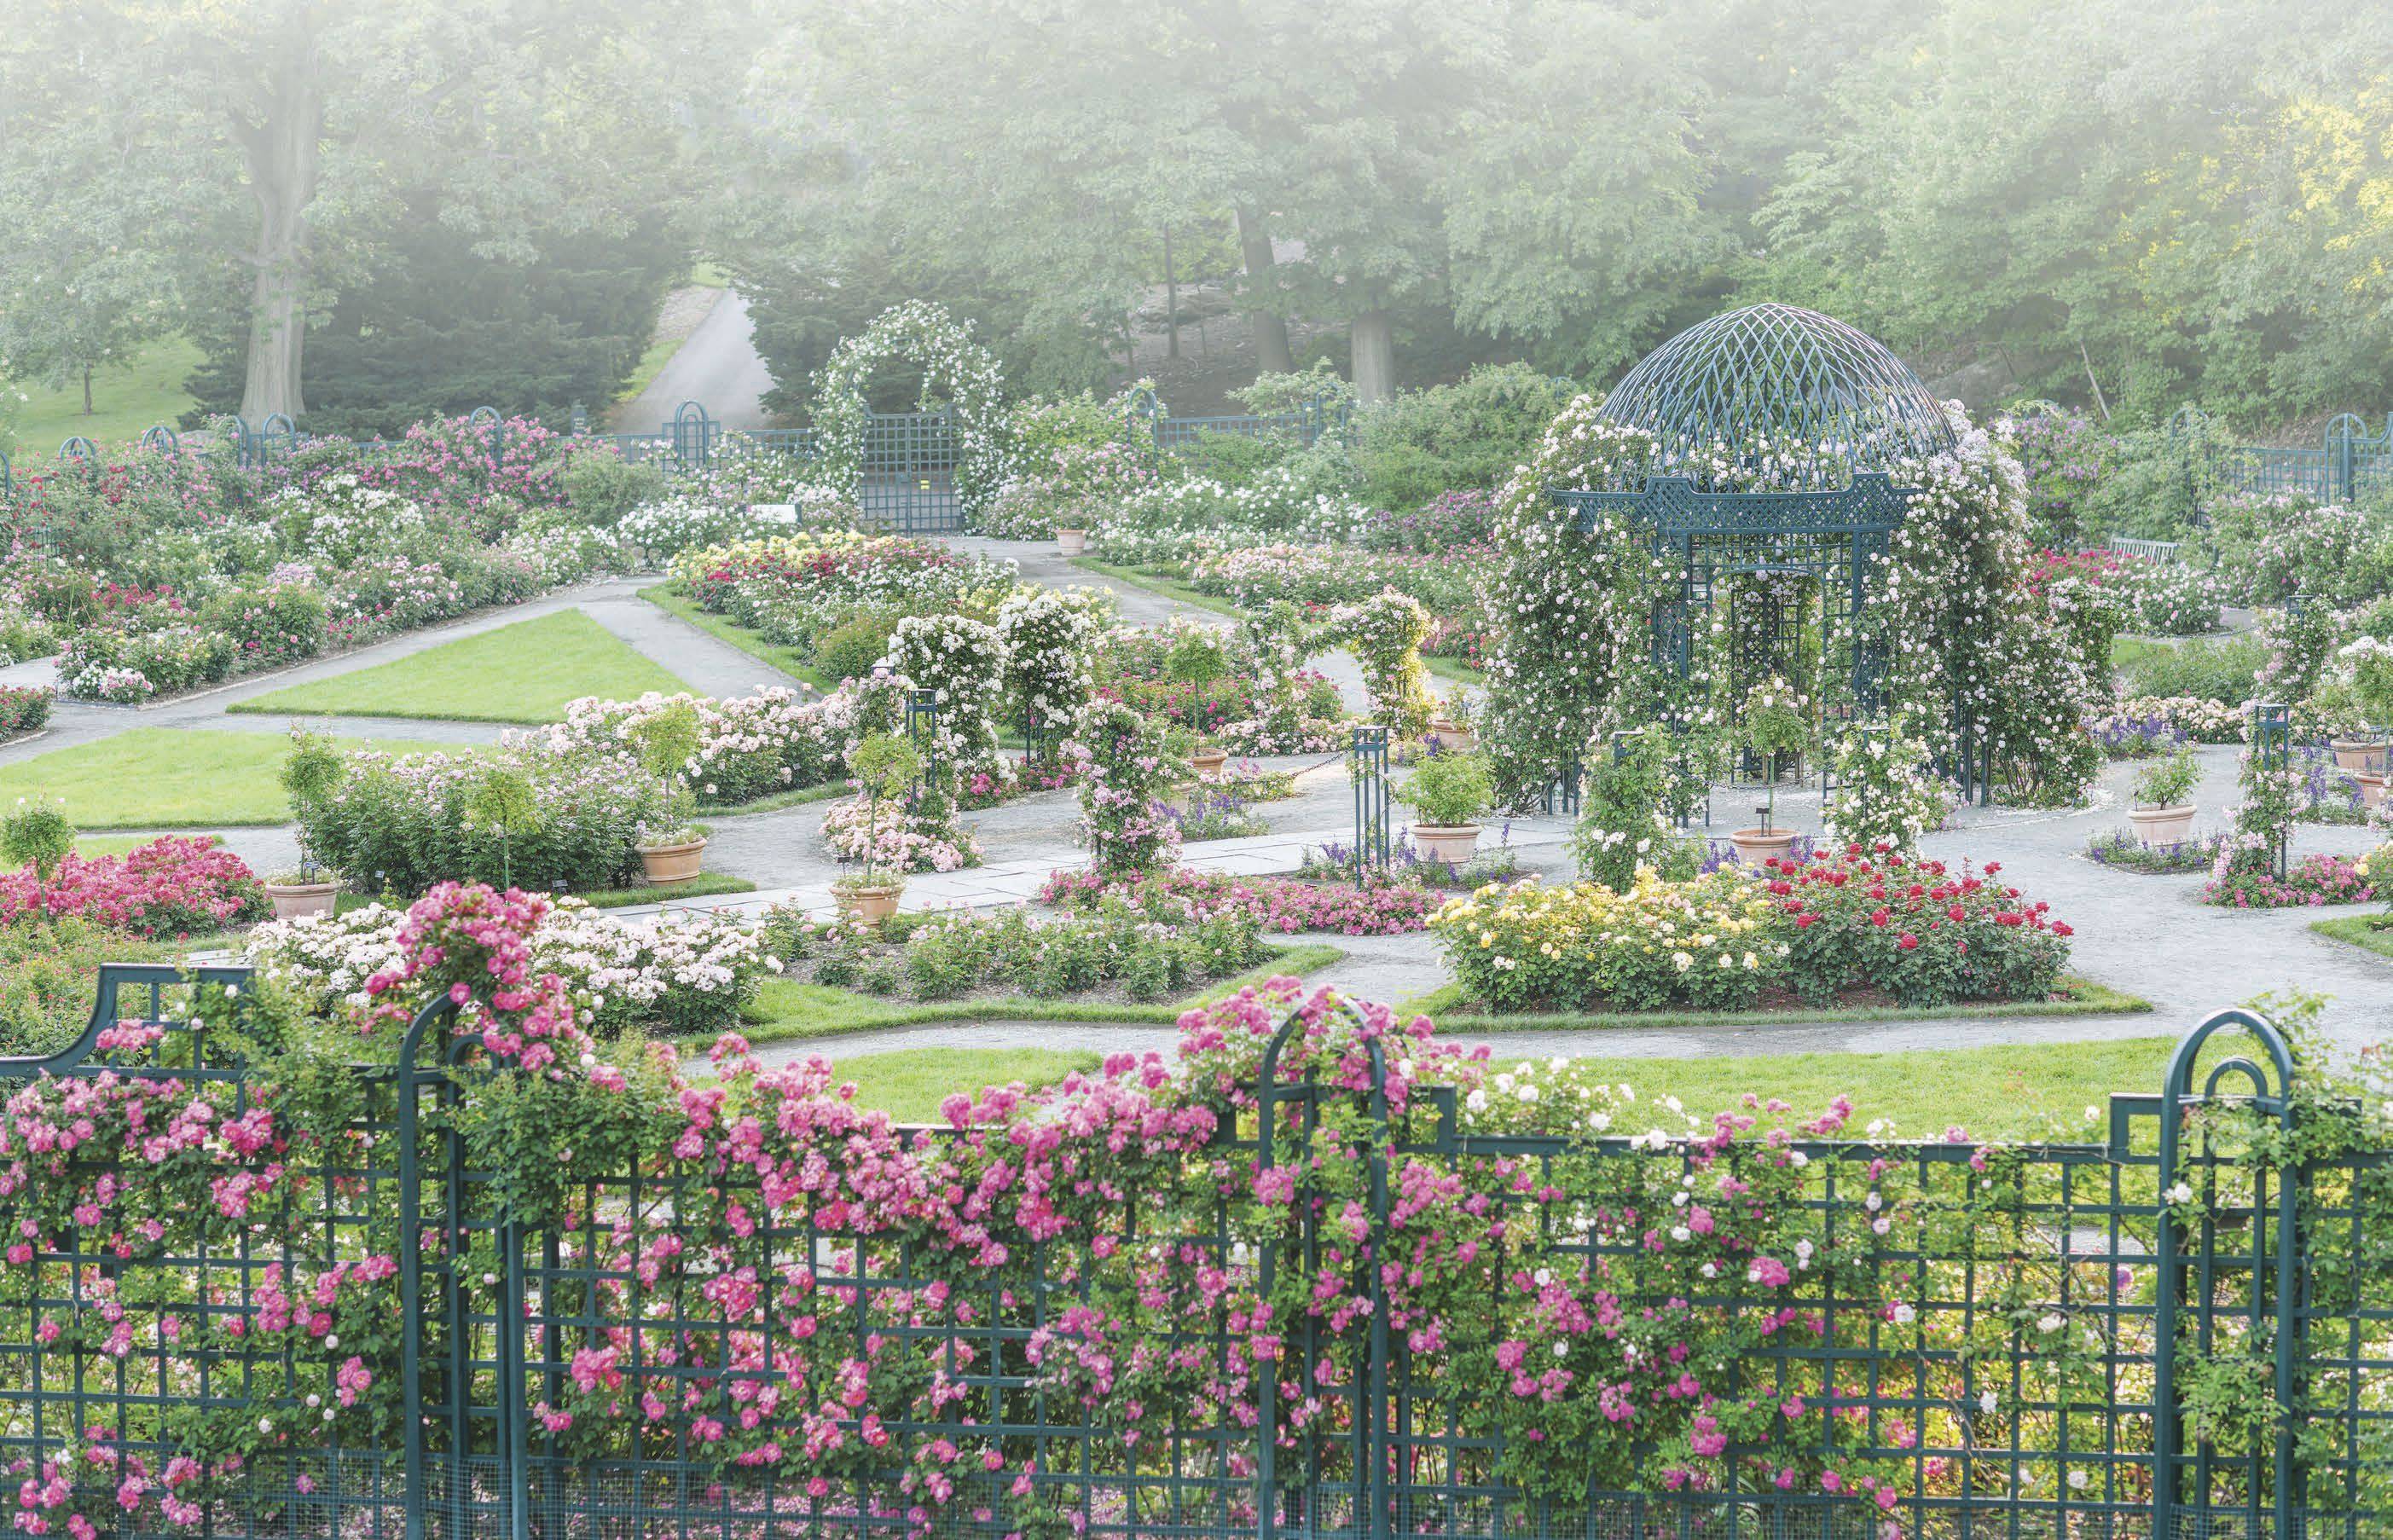 The Peggy Rockefeller Rose Garden